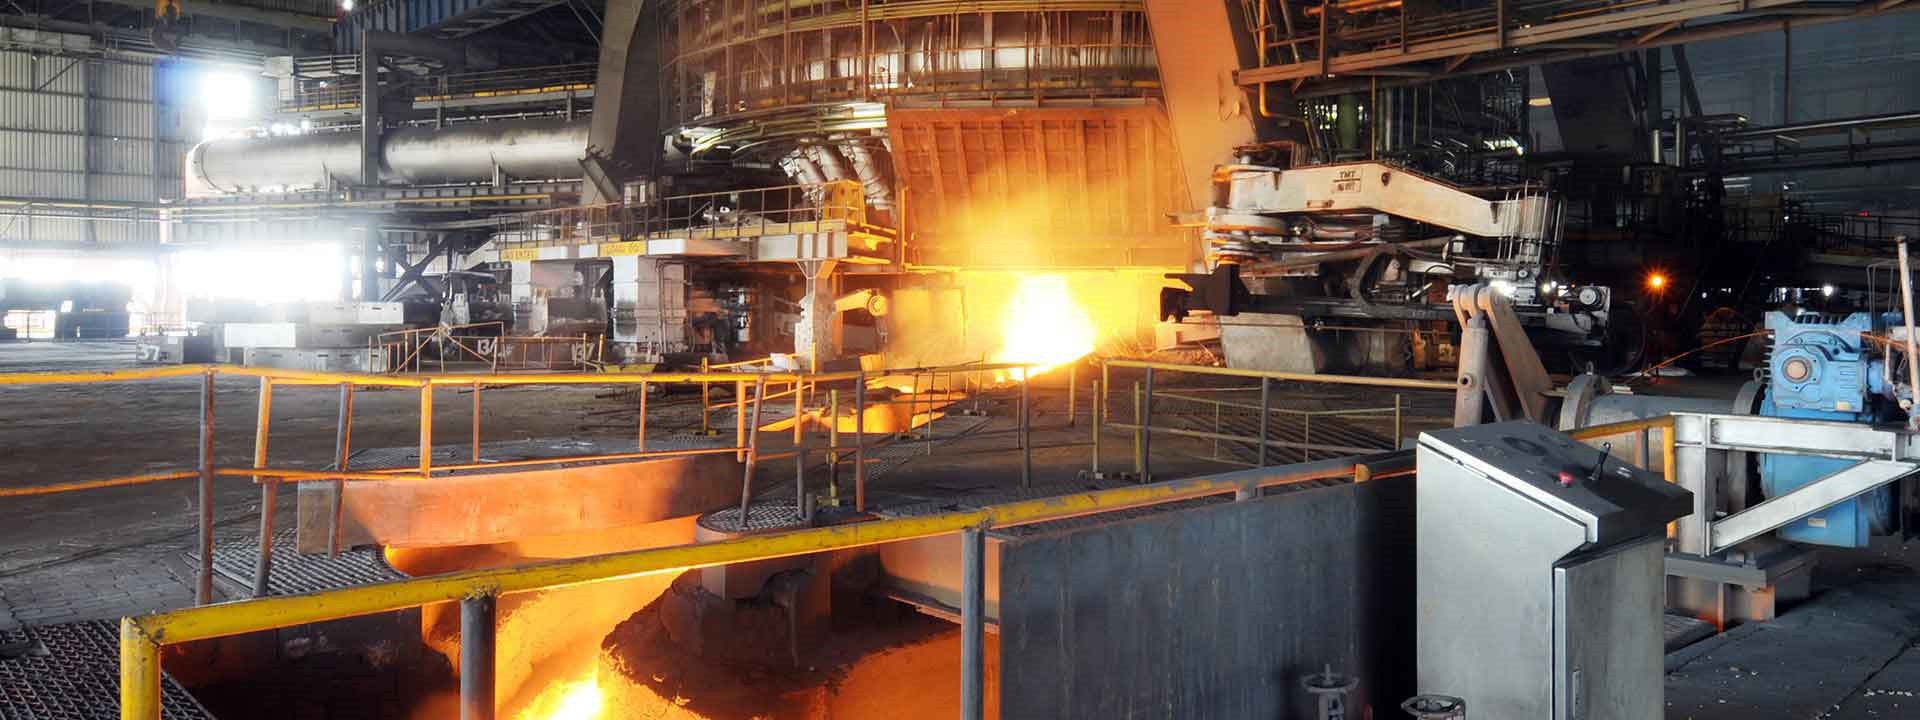 Blast Furnace plant in Vishakapatnam- L&T Construction